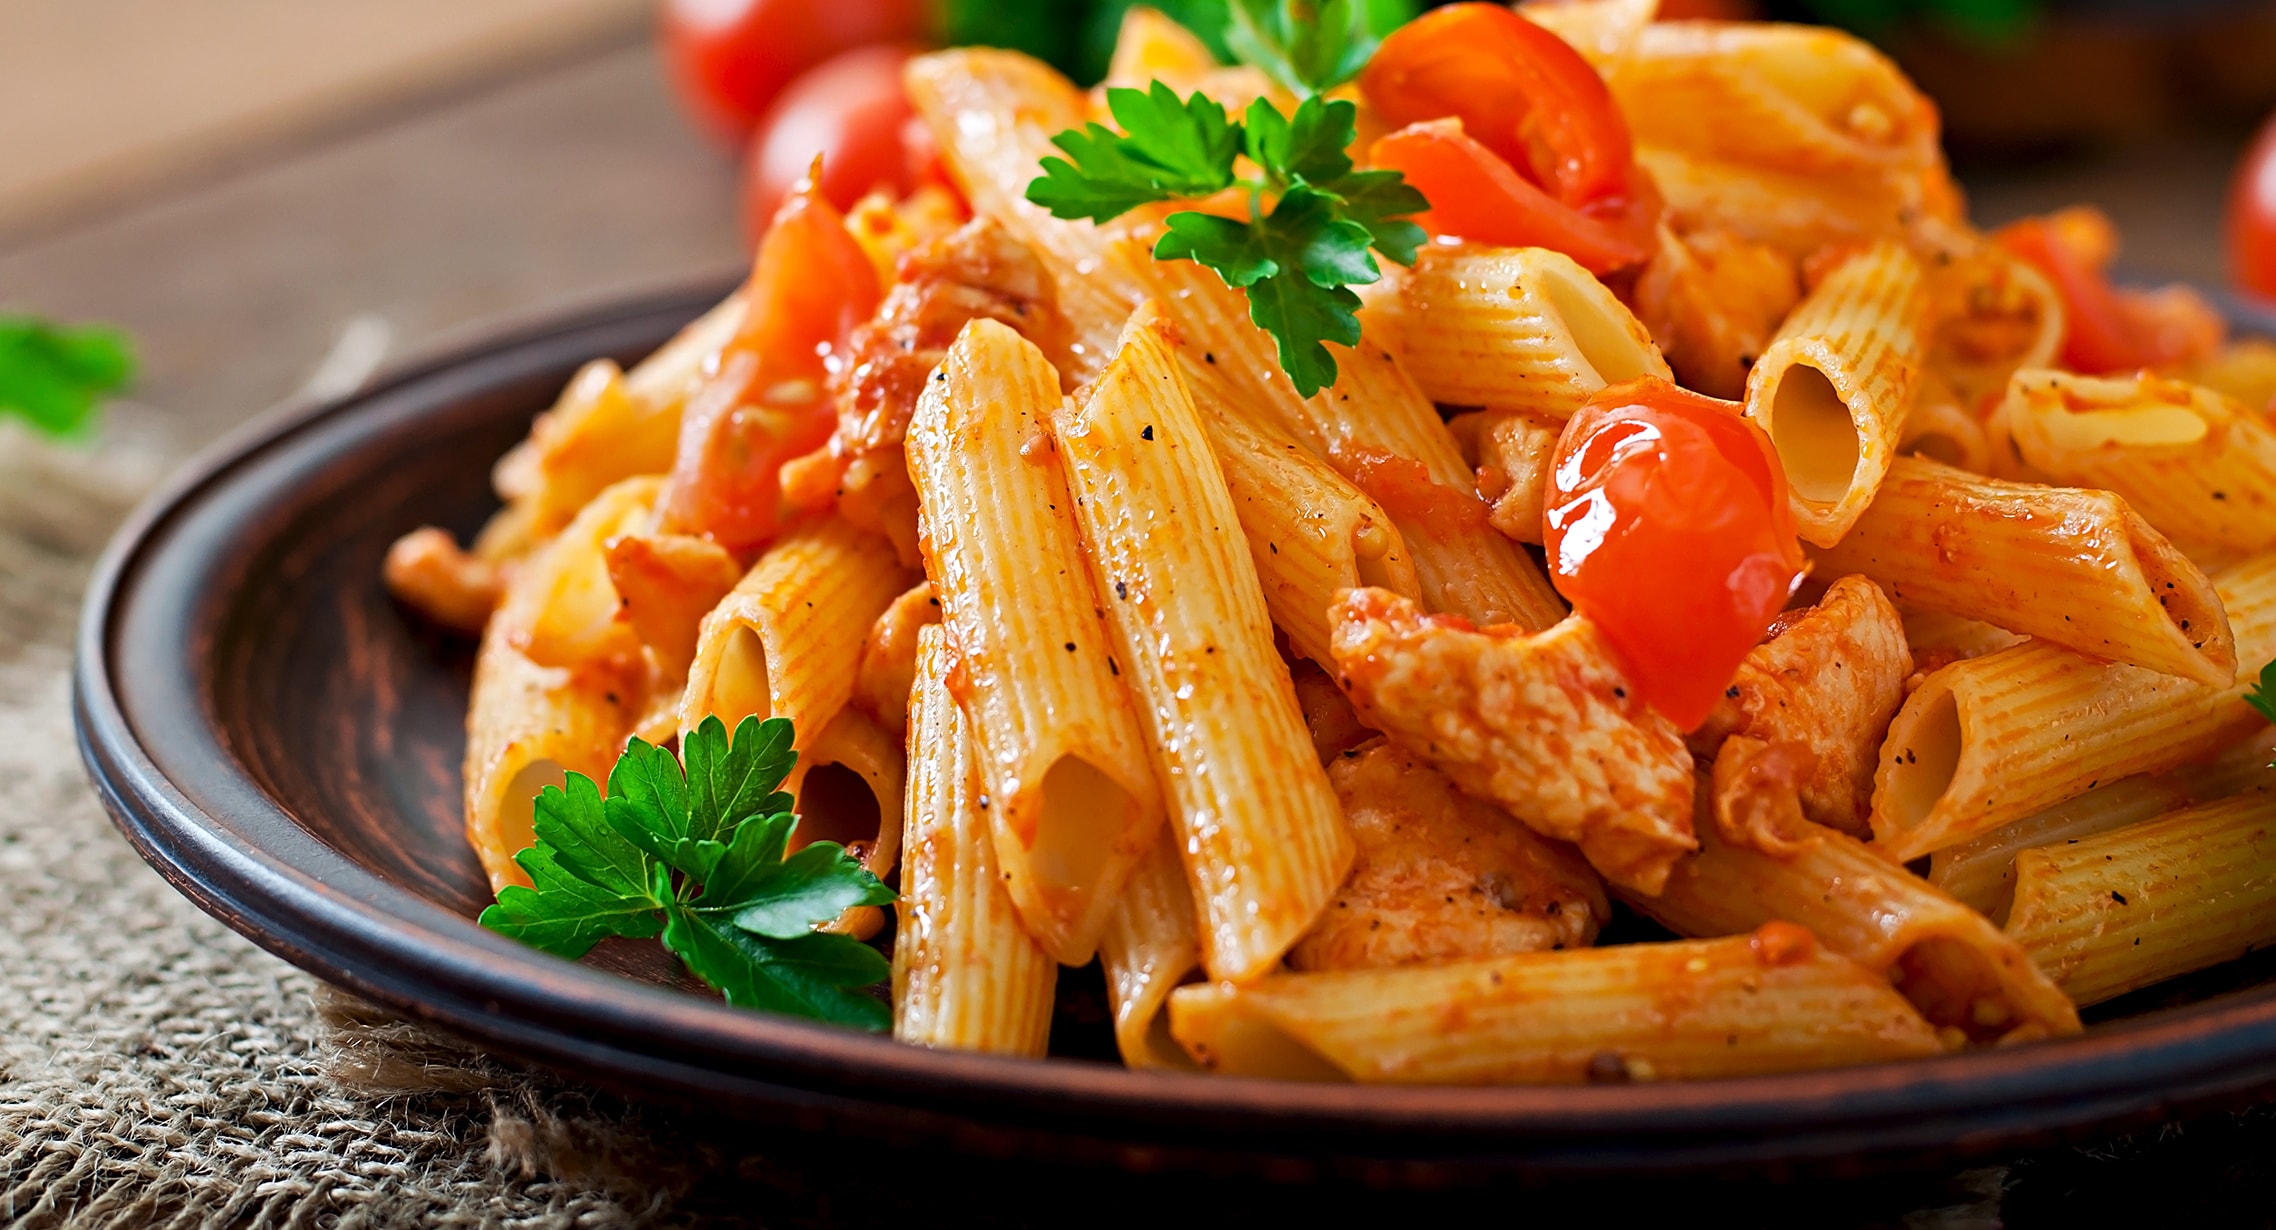 close-up of pasta